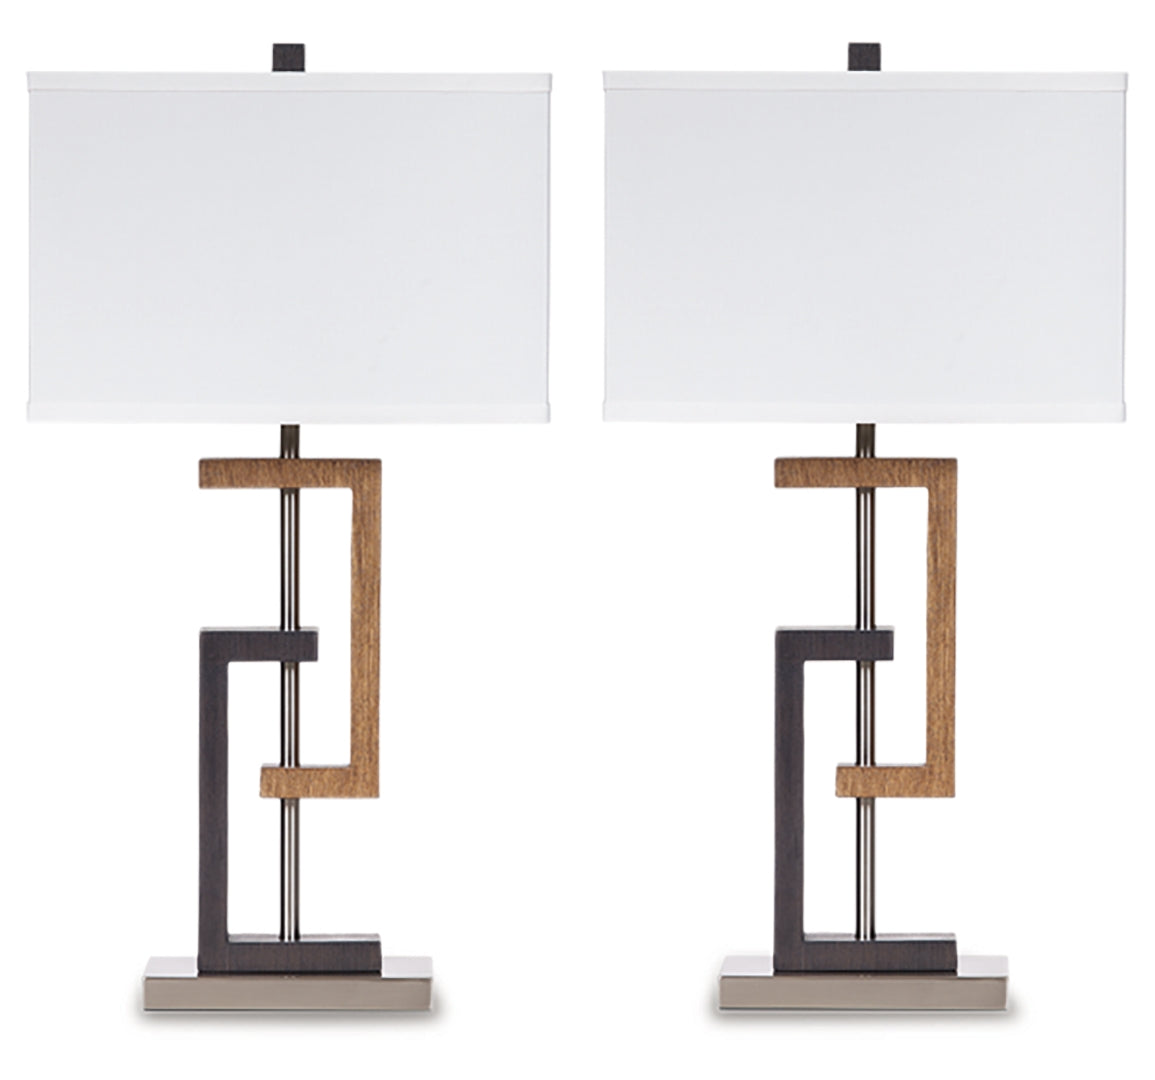 Syler Table Lamp (Set of 2)